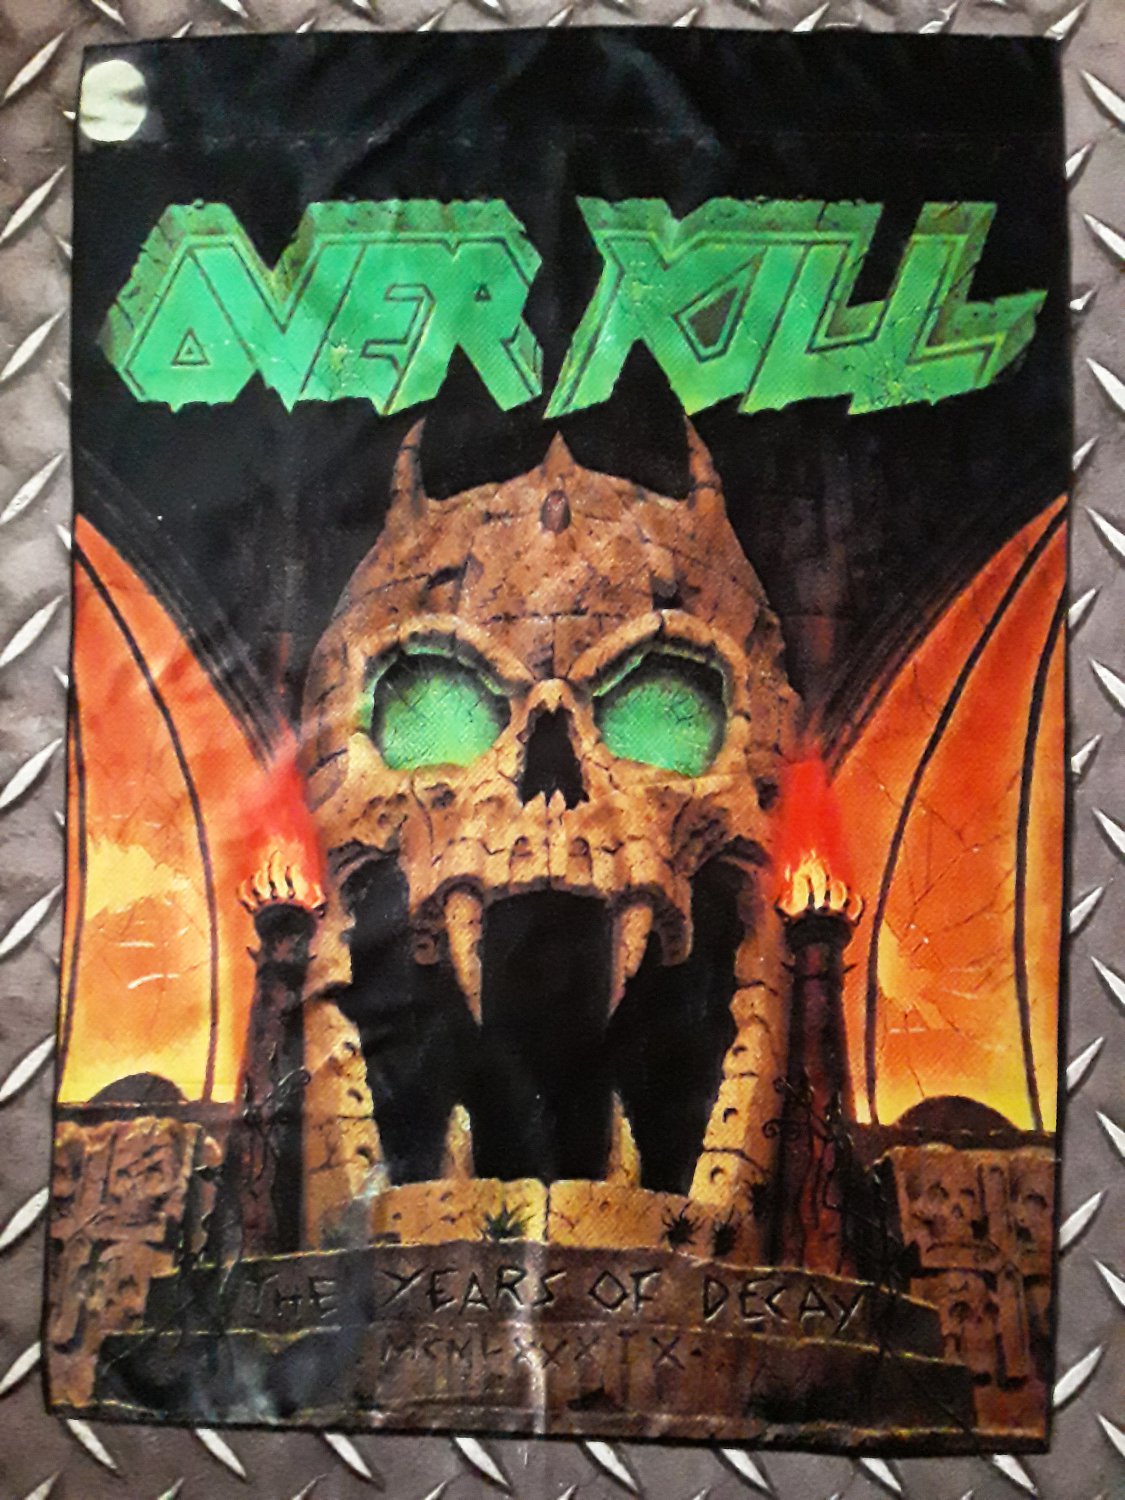 OVERKILL - The years of decay FLAG Thrash metal cloth poster Sadus Slayer Sodom